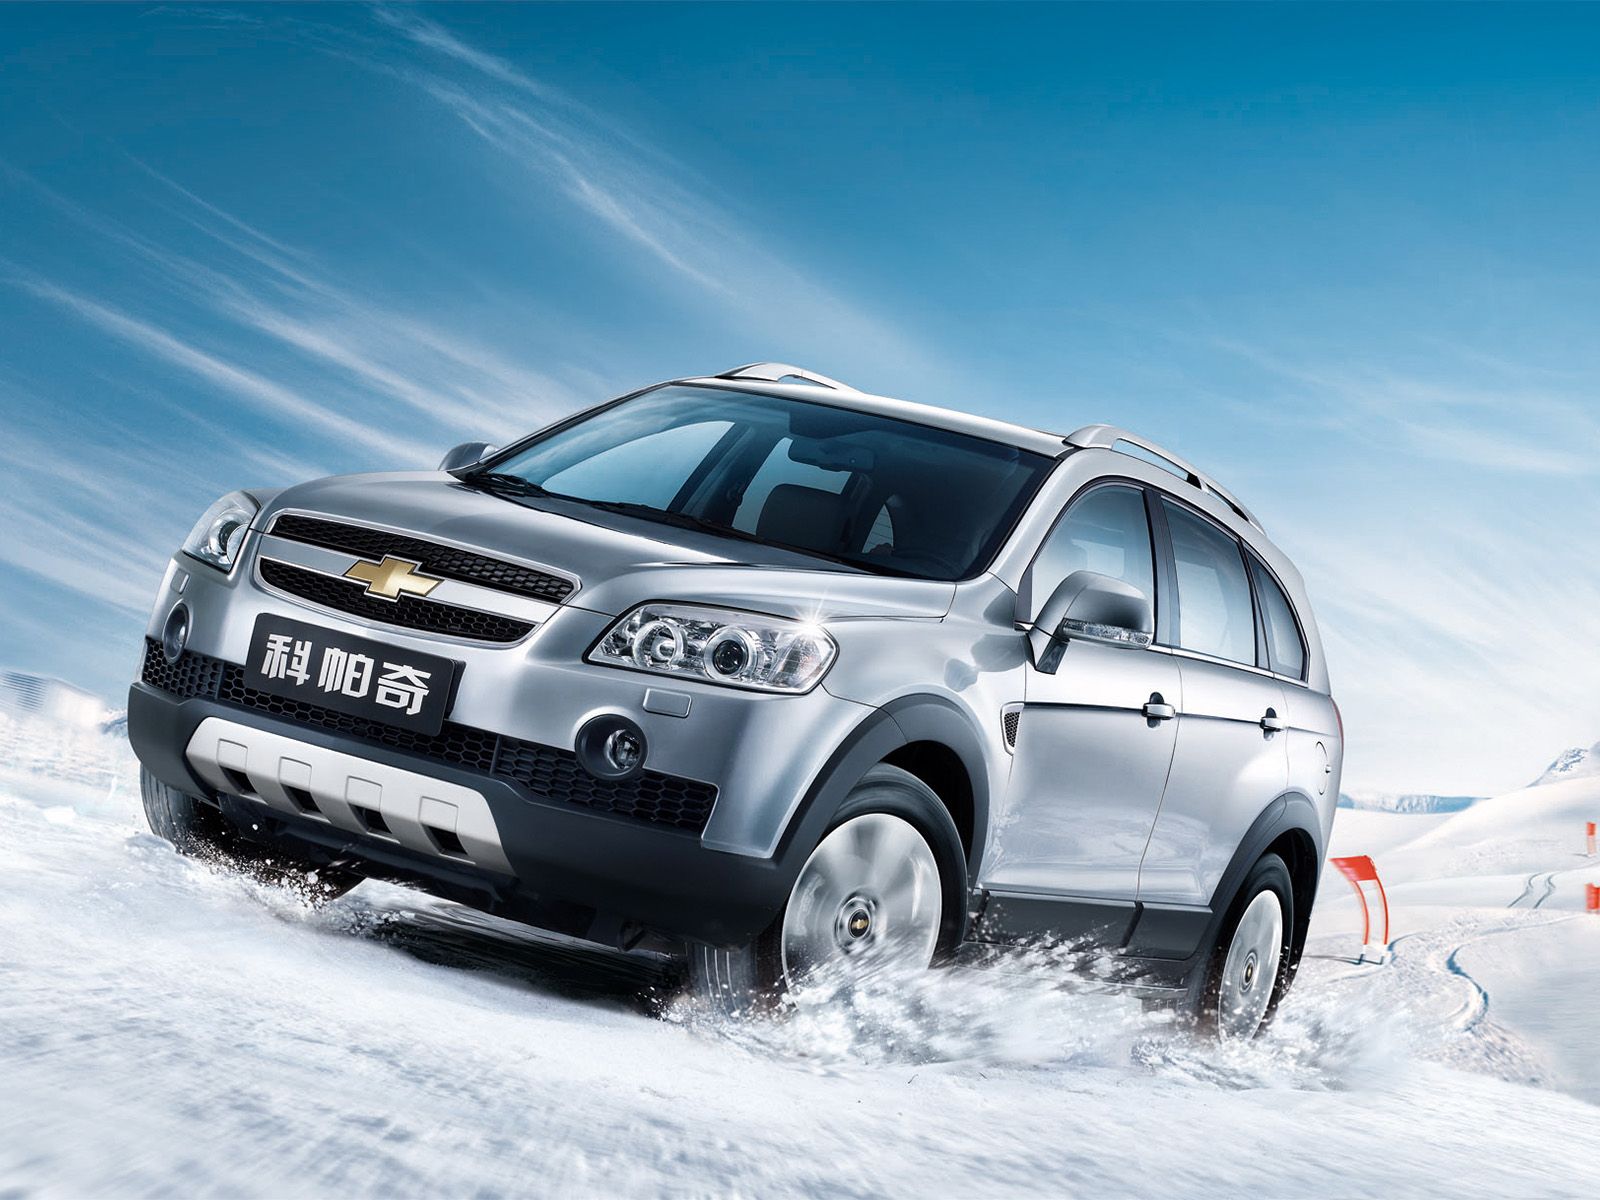 Chevrolet Captiva On Snow Wallpaper 1600x1200